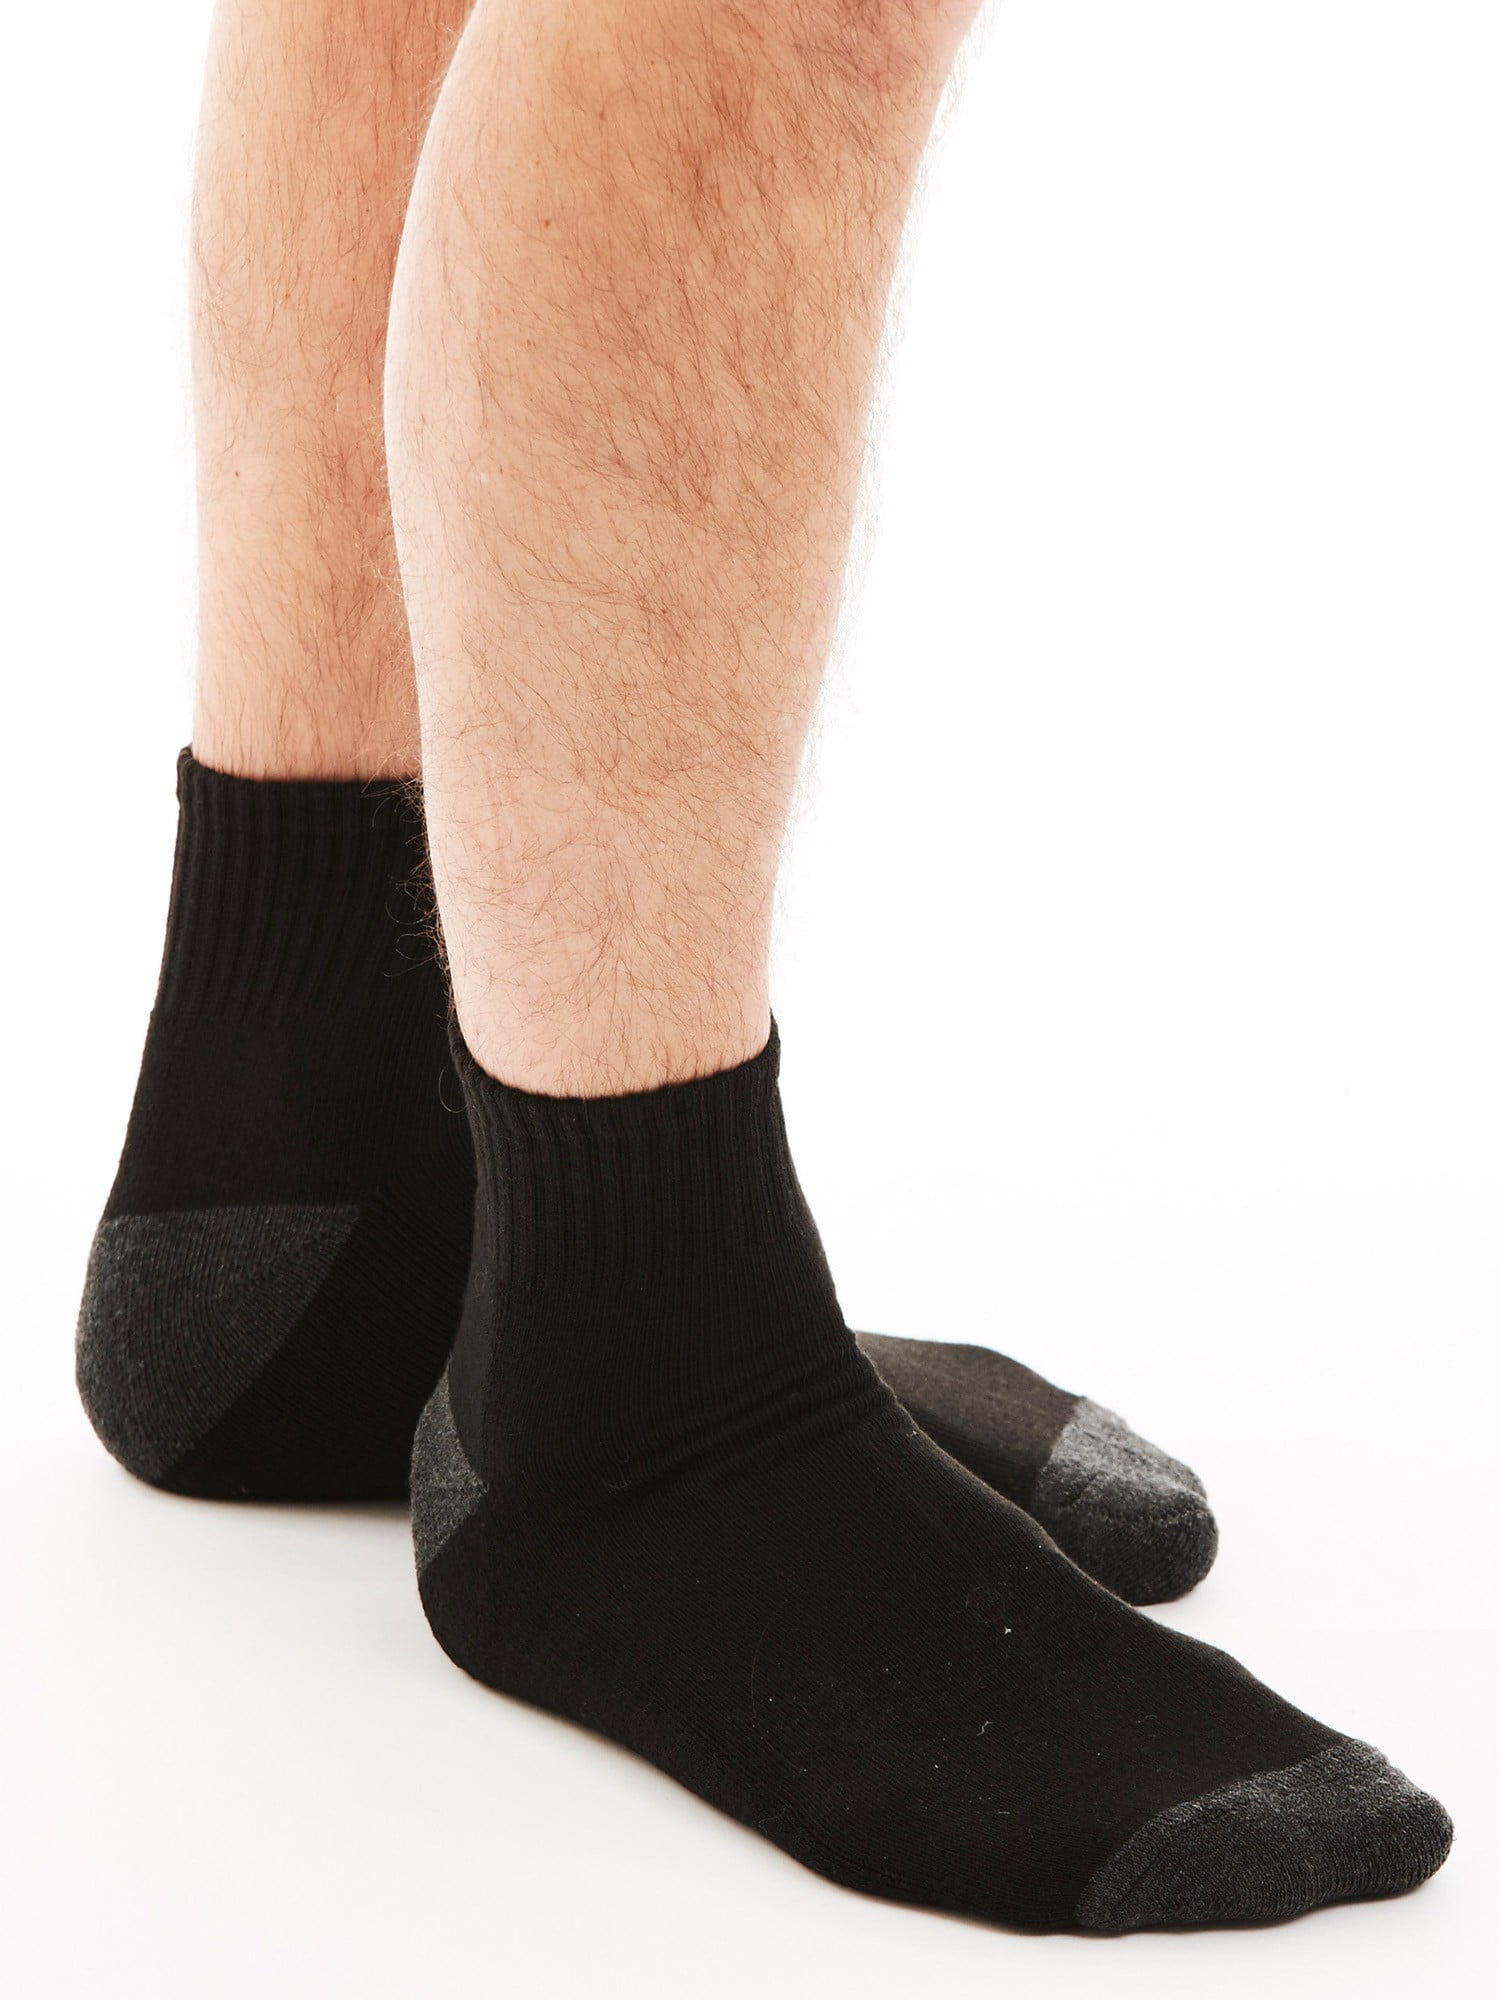 Men's Ankle Socks - 18 Pack - Synthetic - Bolter